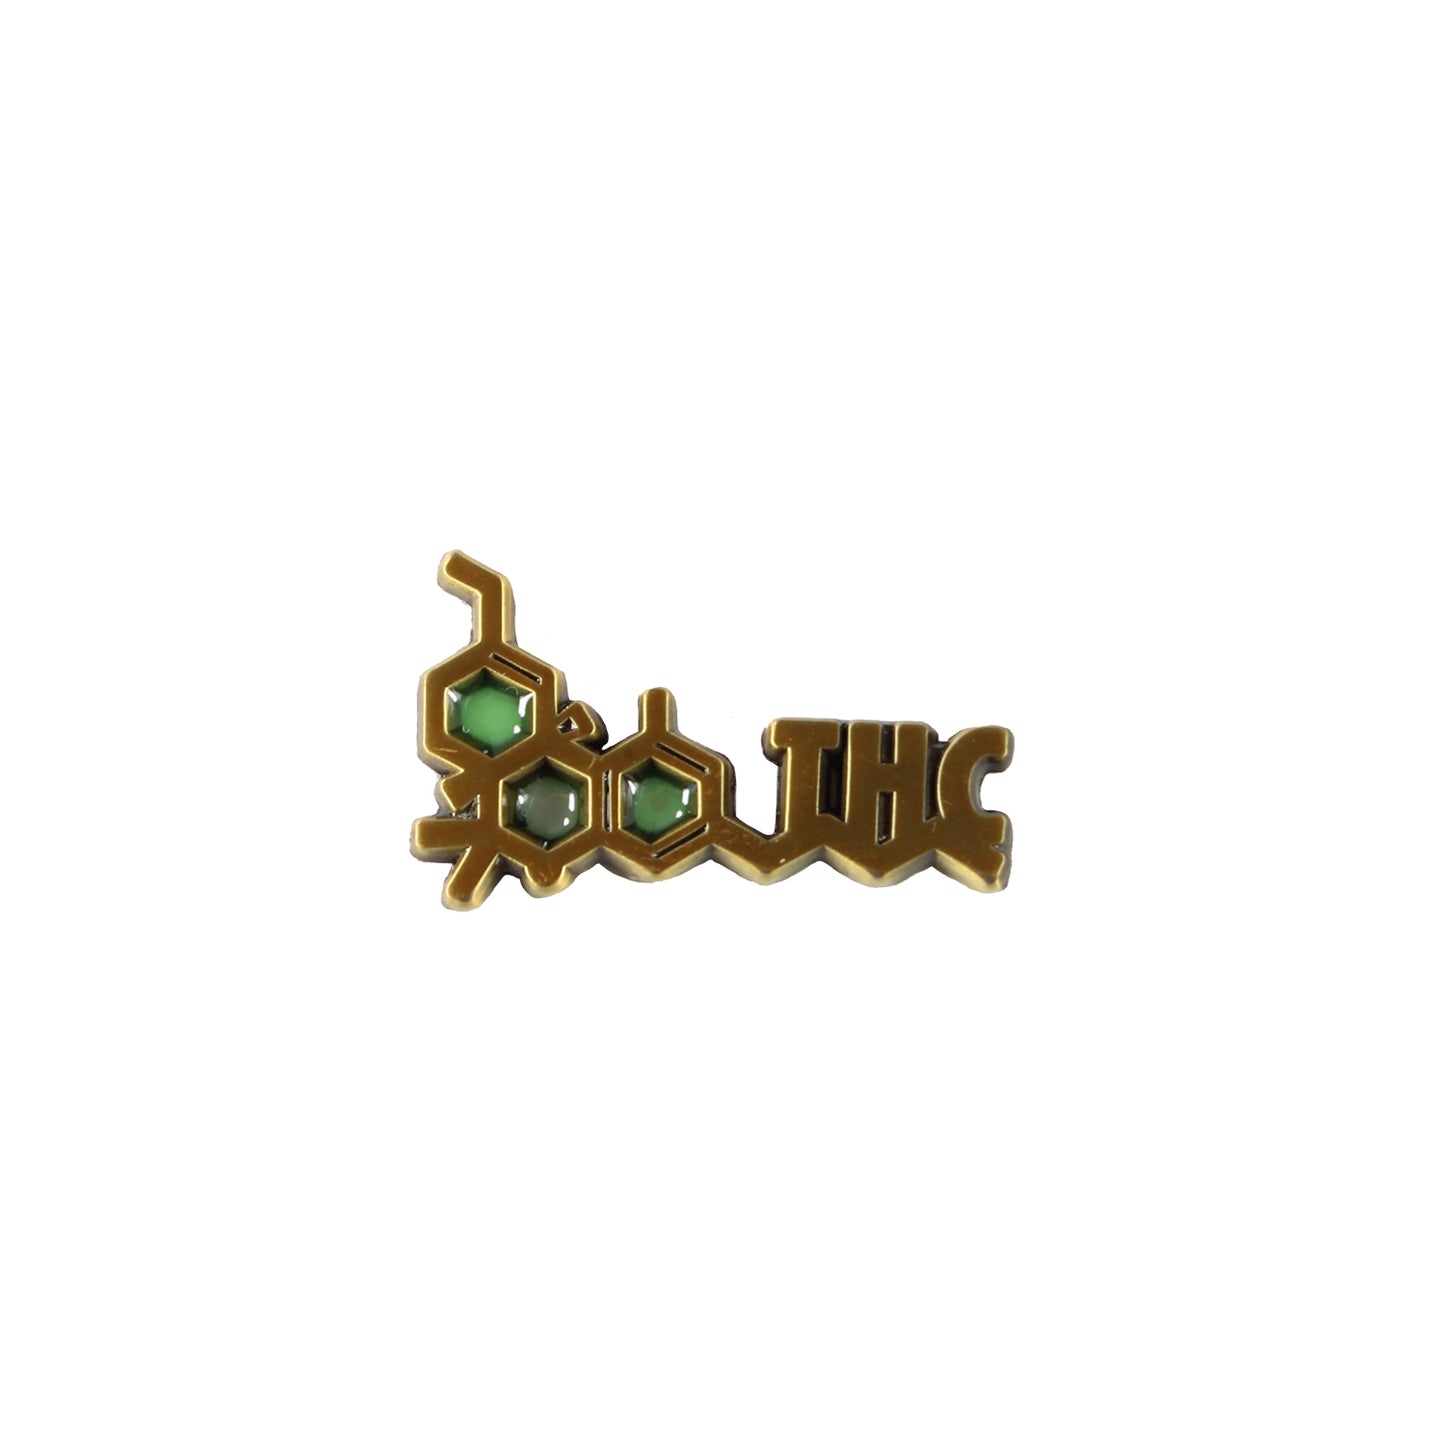 THC - Gold Pin